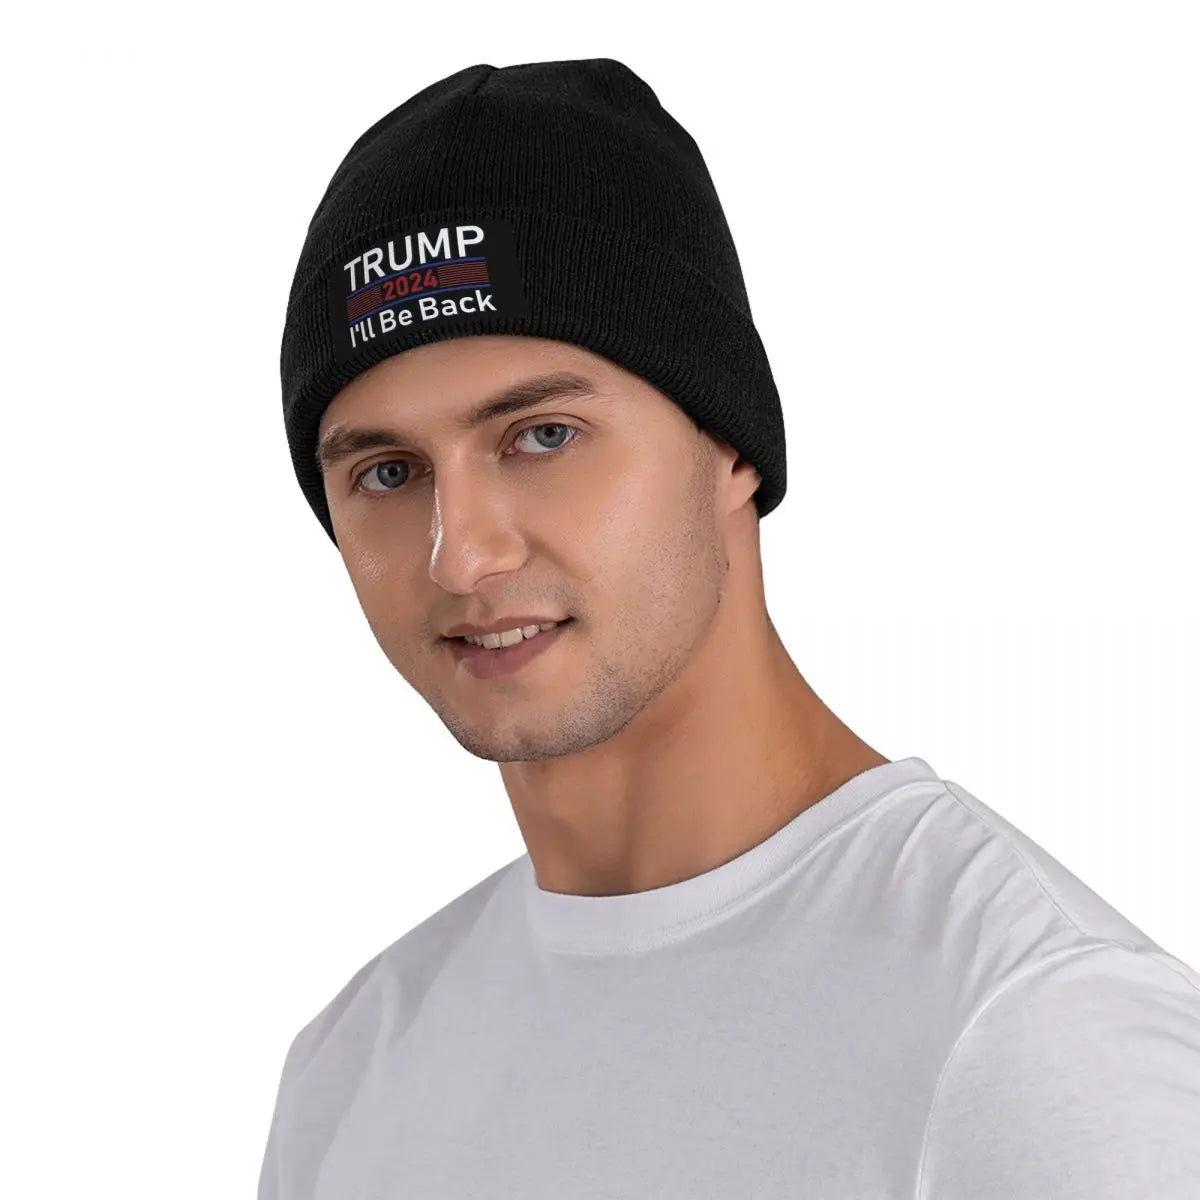 Trump 2024 I'll Be Back Bonnet Hat Knit Hat Men Women Fashion Unisex Adult Winter Warm Skullies Beanies Caps